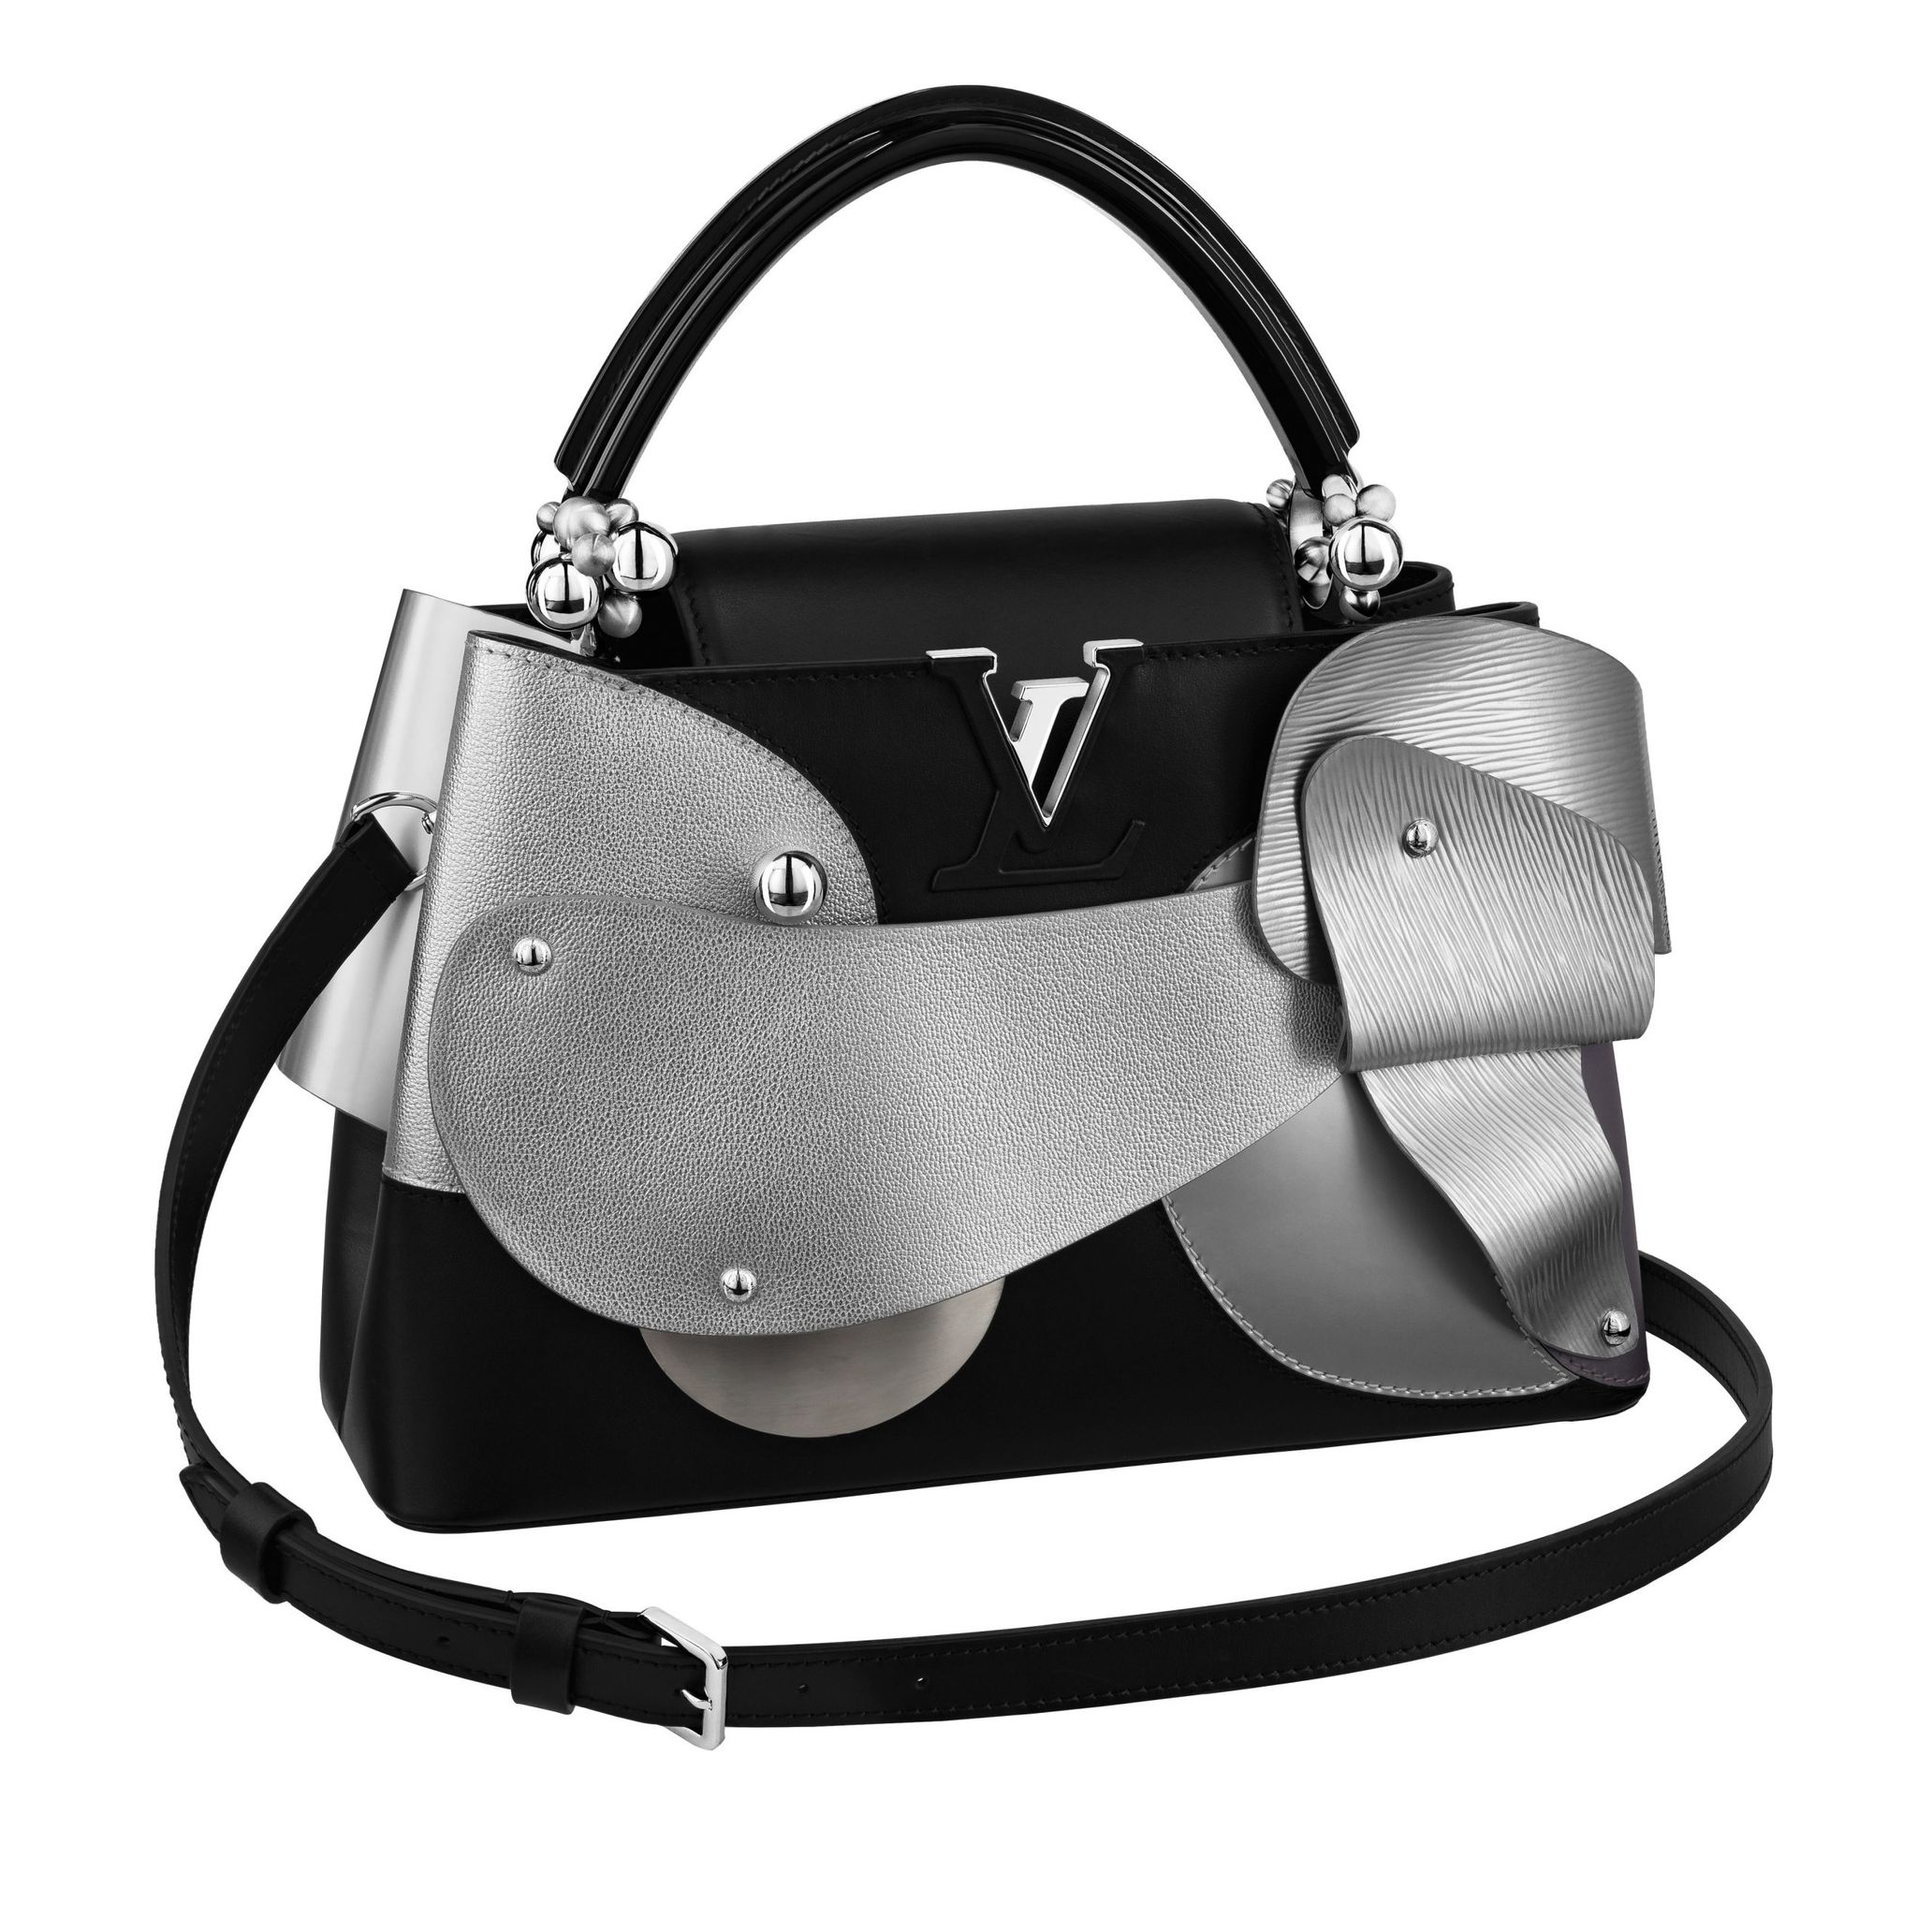 Louis Vuitton inspired tumbler – NH Timeless Designers